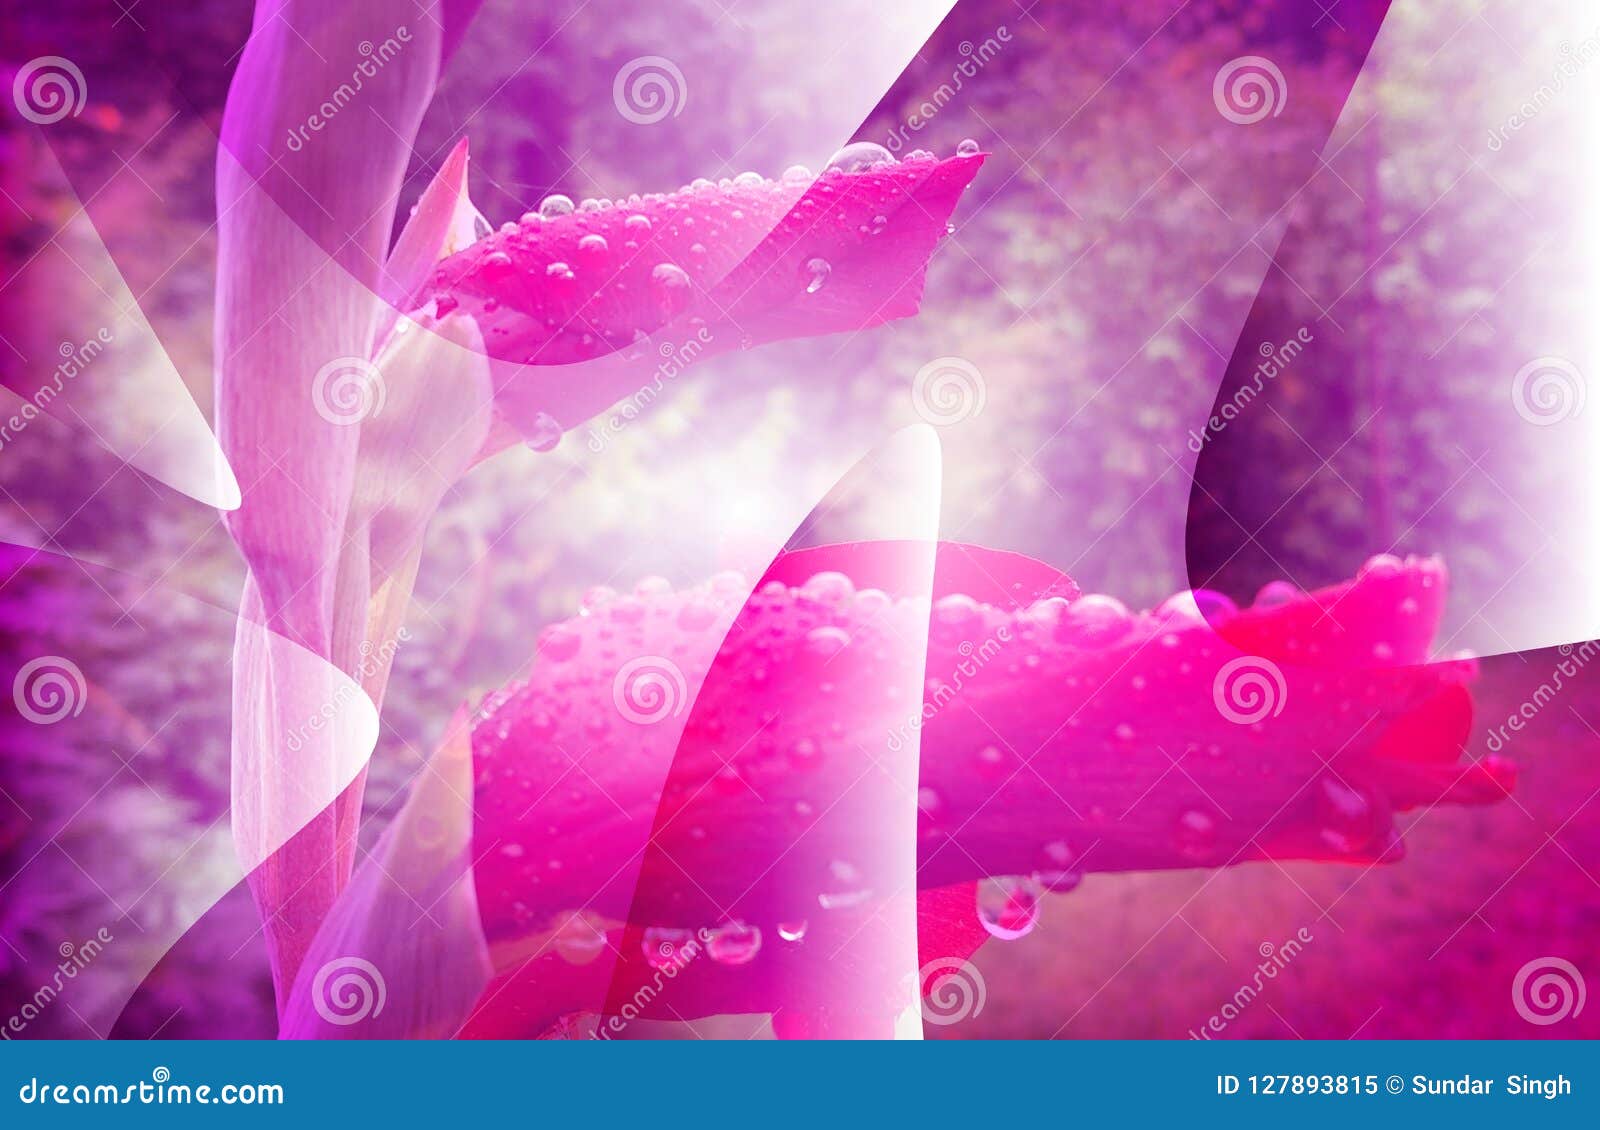 Purple Flower Background Wallpaper Water Drop Stock Illustration -  Illustration of draw, dark: 127893815